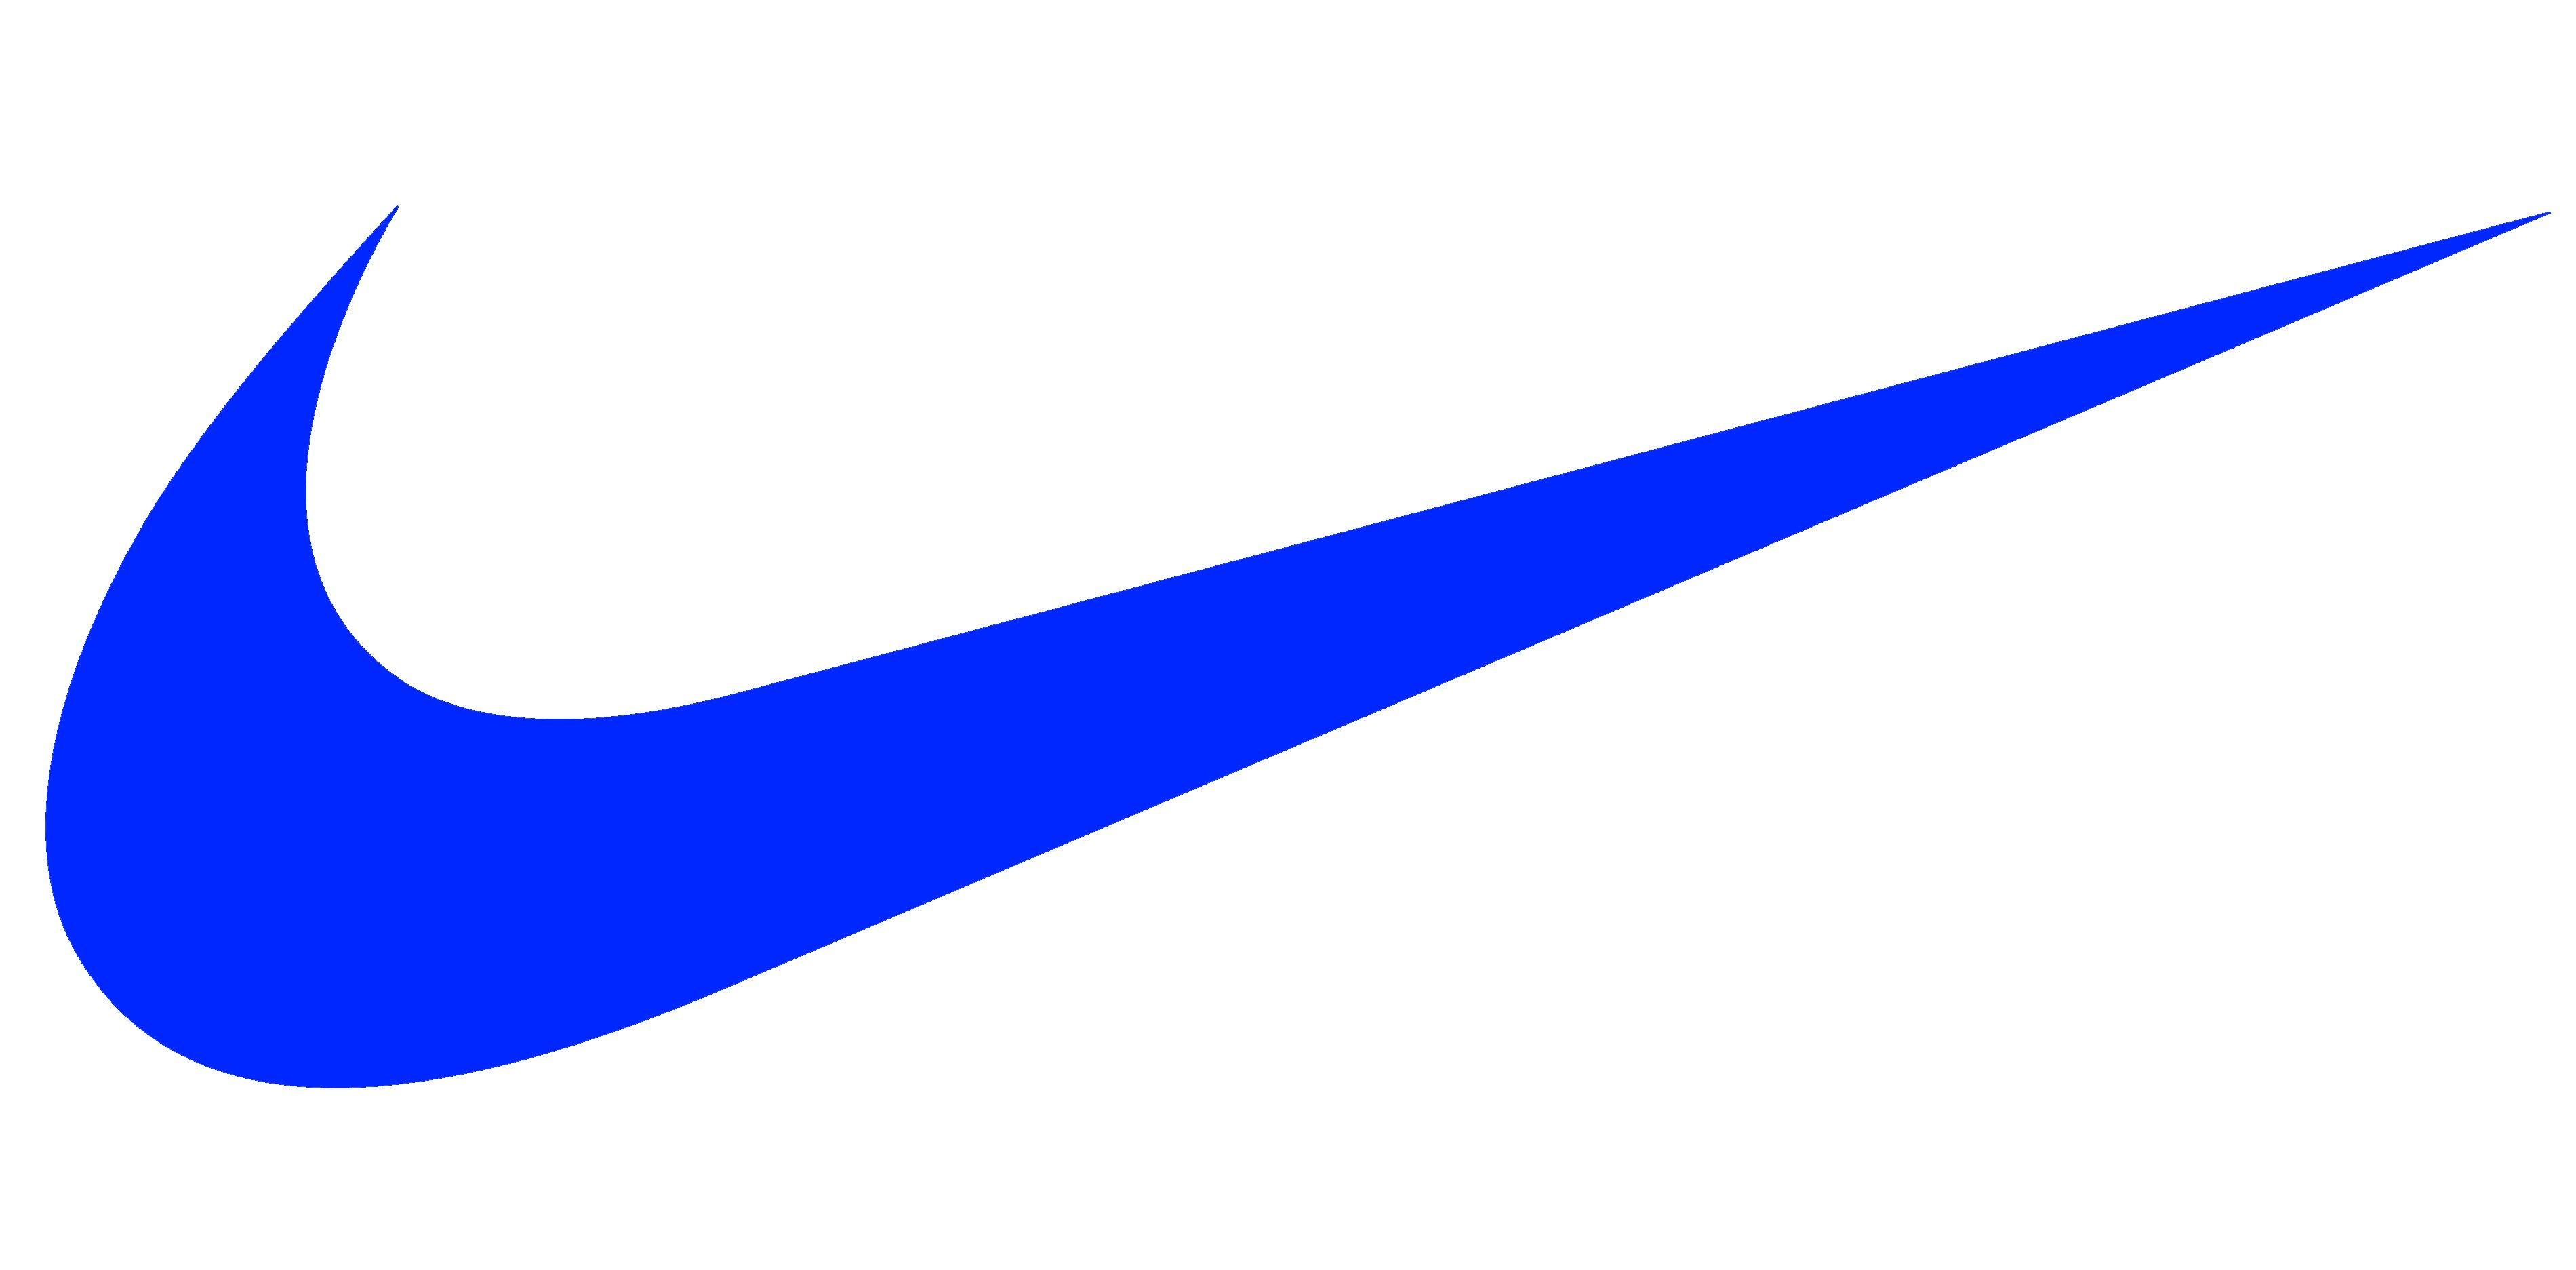 Nike Swoosh Wallpapers - Top Free Nike Swoosh Backgrounds - WallpaperAccess